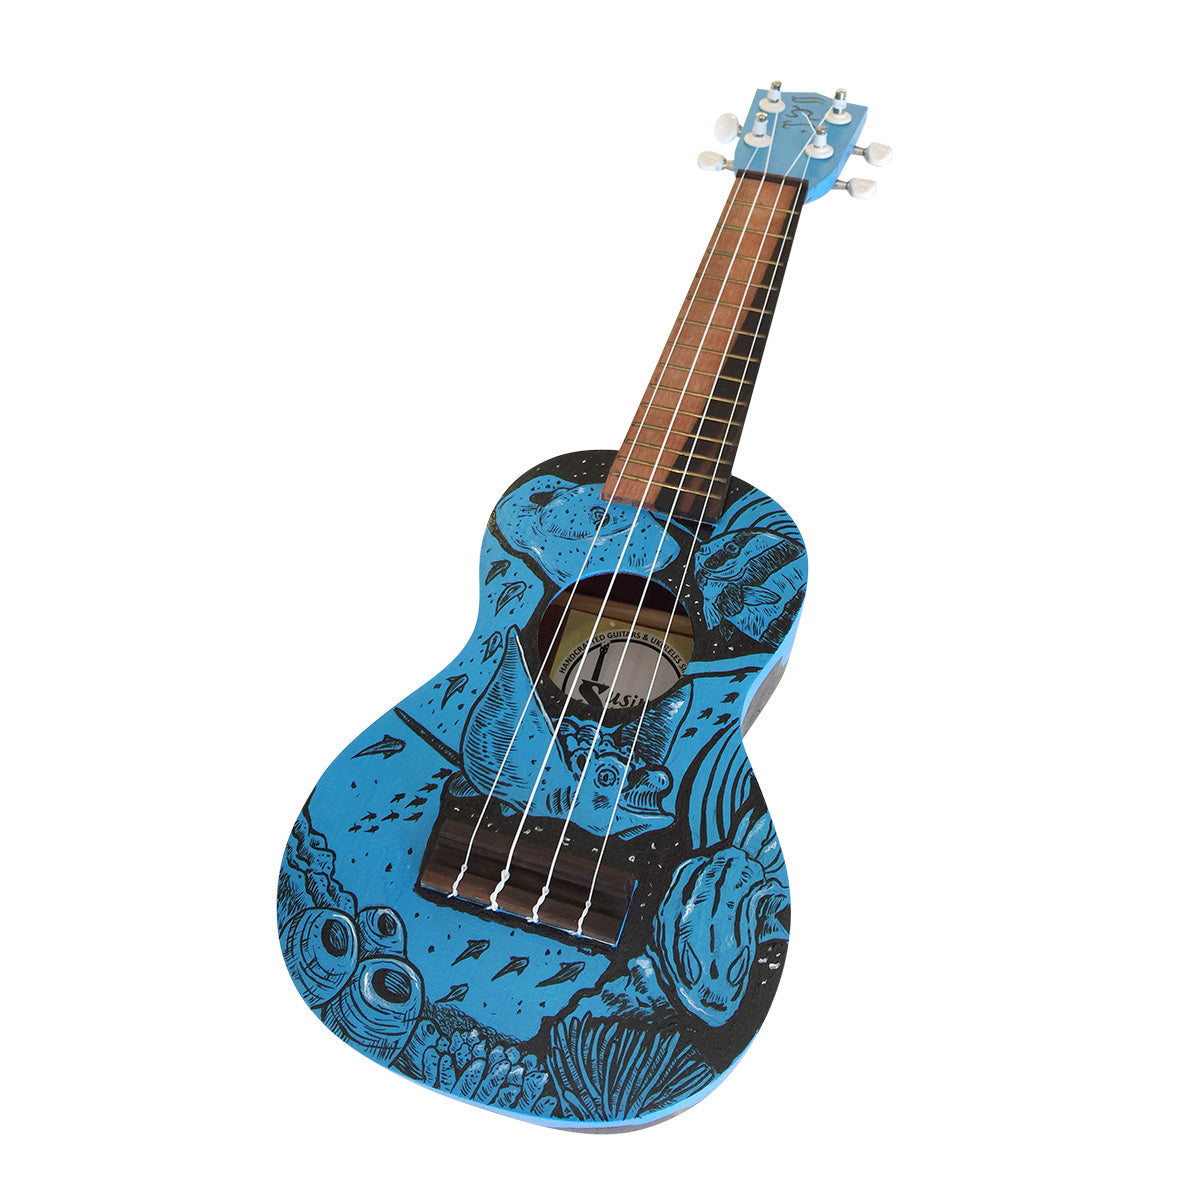 Dumaguete city Cebu crafted guitar ukulele art artwork Angelo Delos Santos Philippines artist Blue Ocean Coral Reef